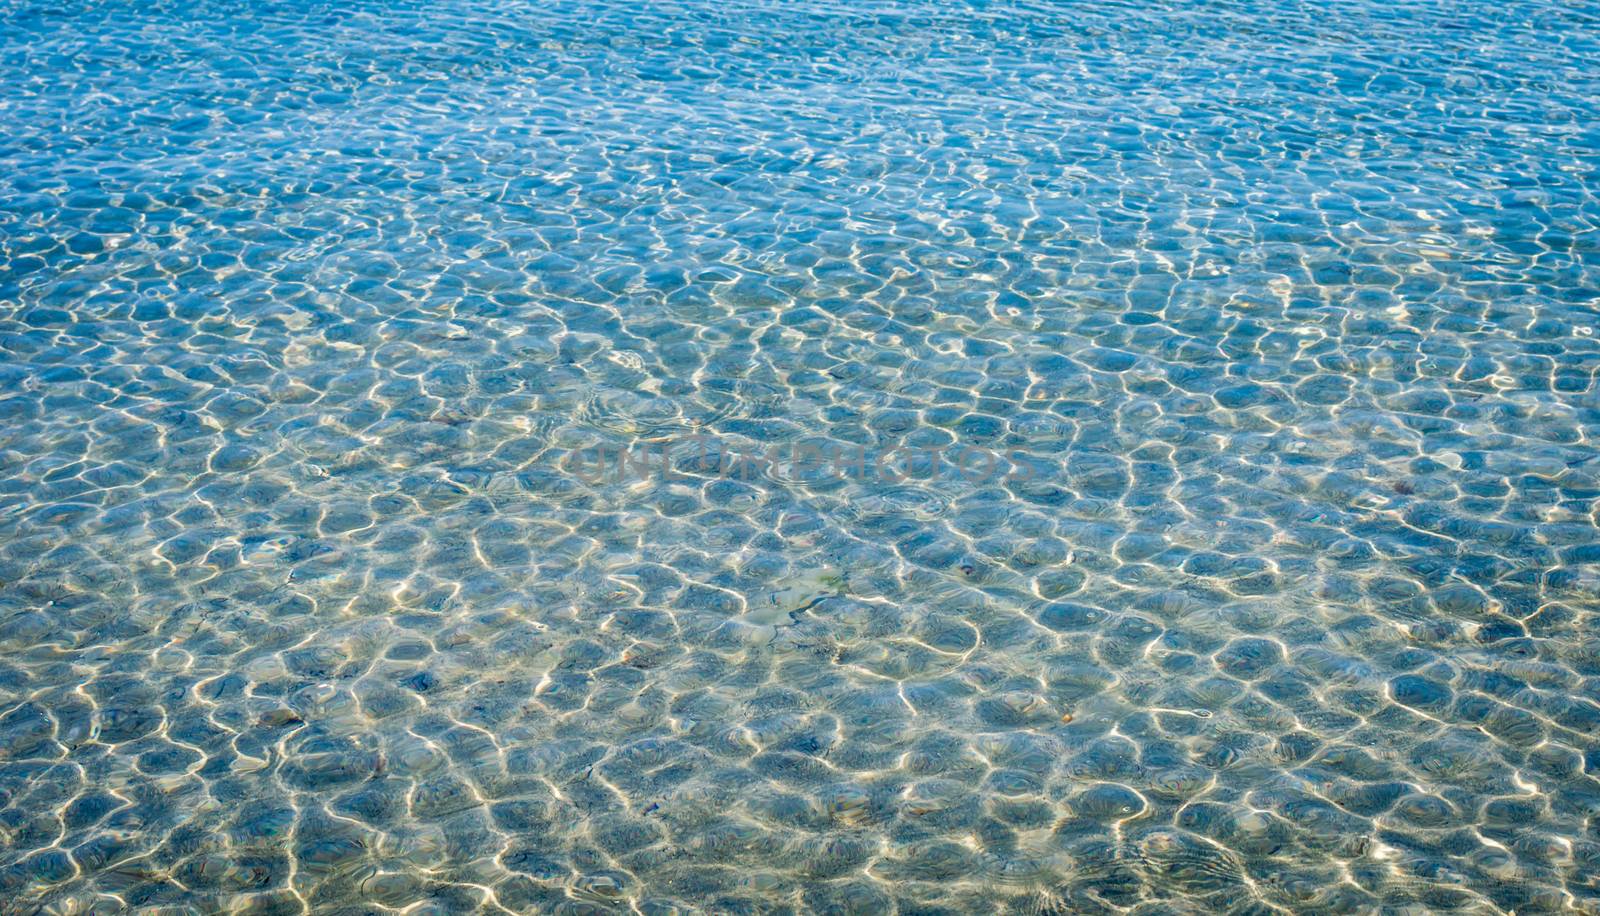 Water of the Atlantic Ocean by okskukuruza